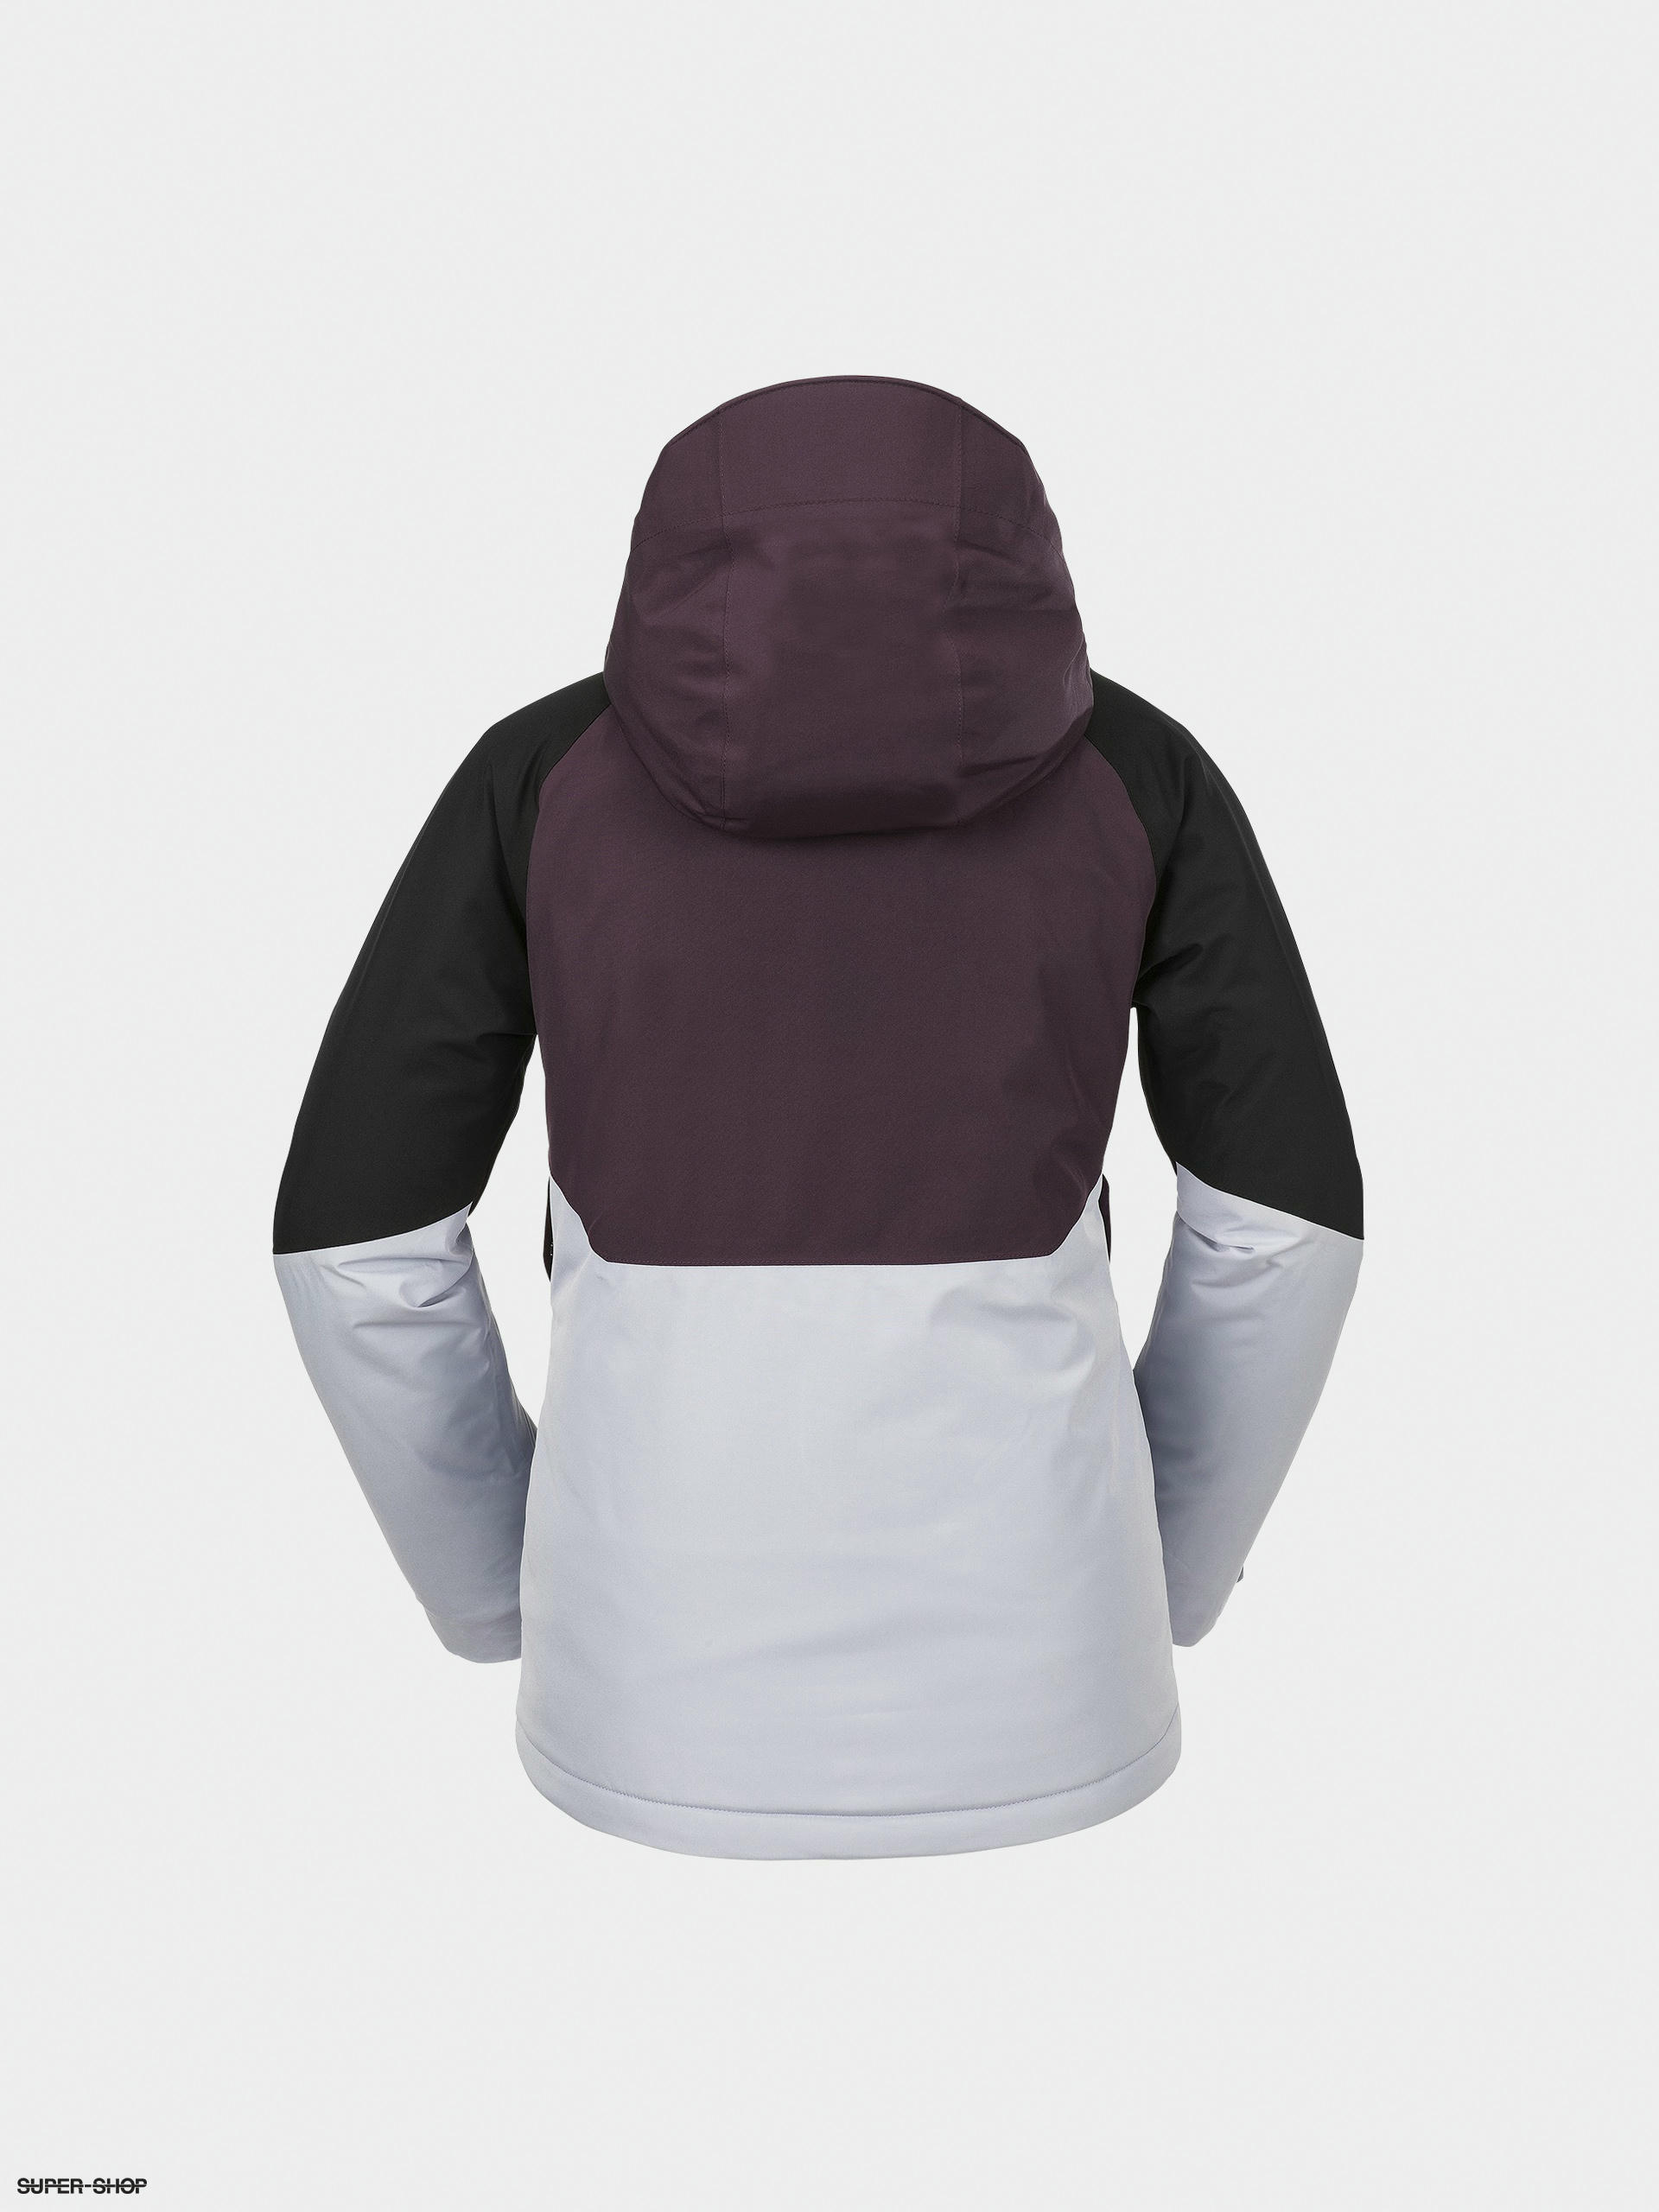 Volcom Puffleup Snowboard jacket Wmn (blackberry)